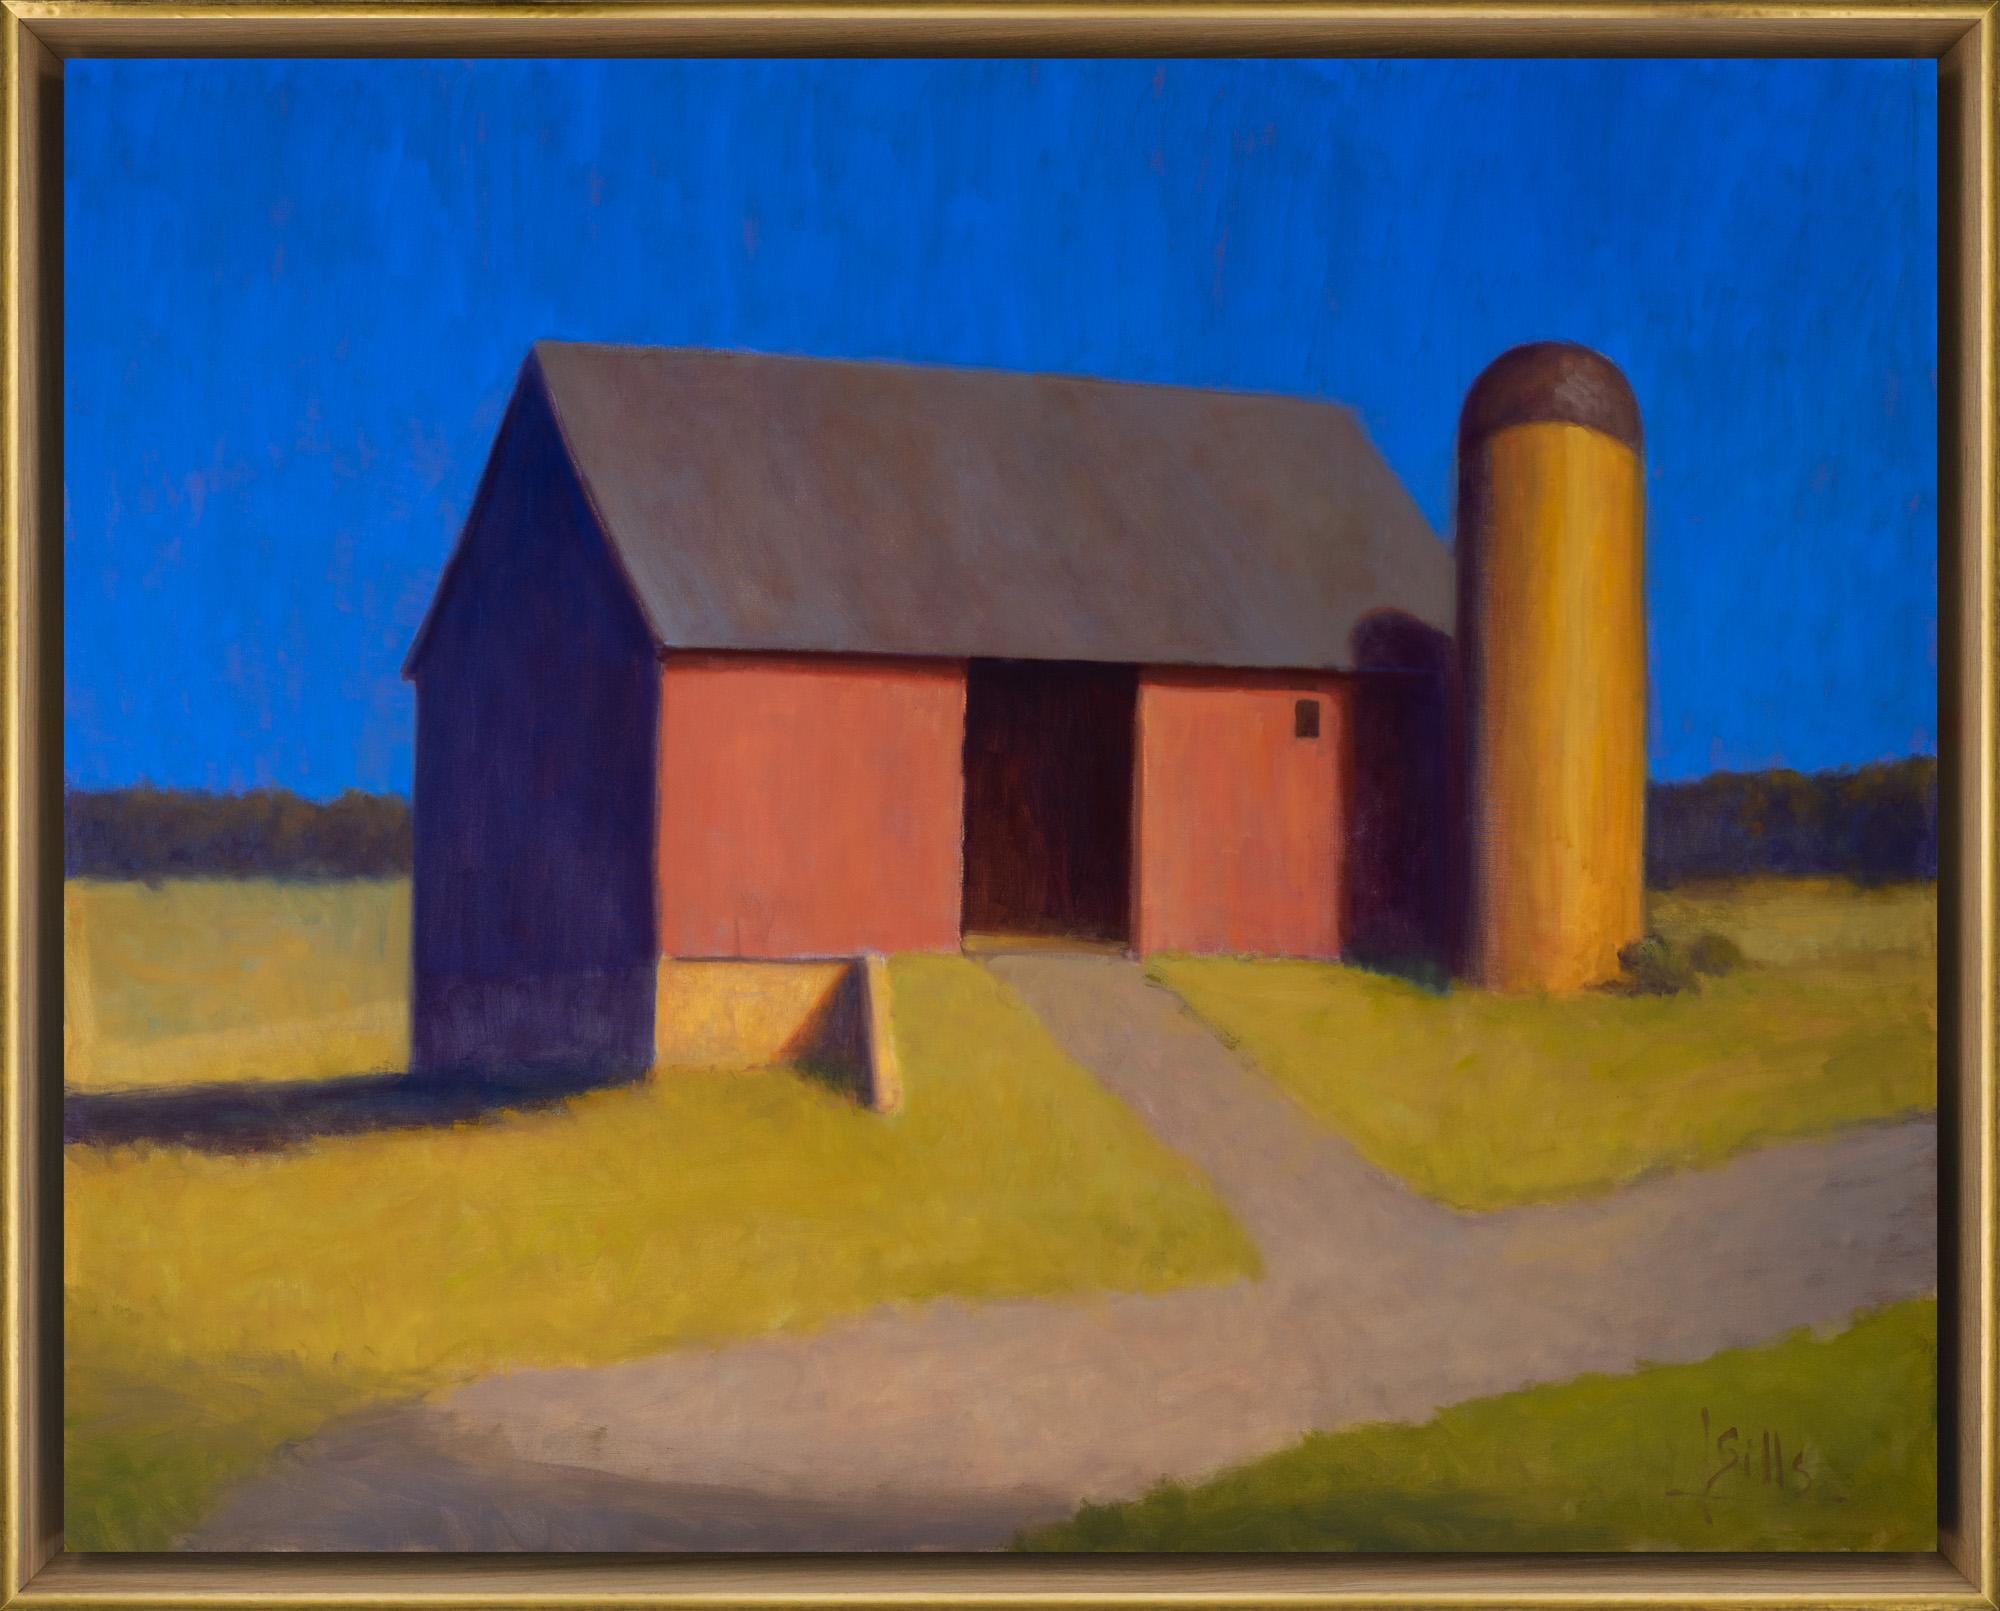 John Sills Landscape Painting - "Evening Barn" Serene Painting of a Barn on a Hillside Landscape